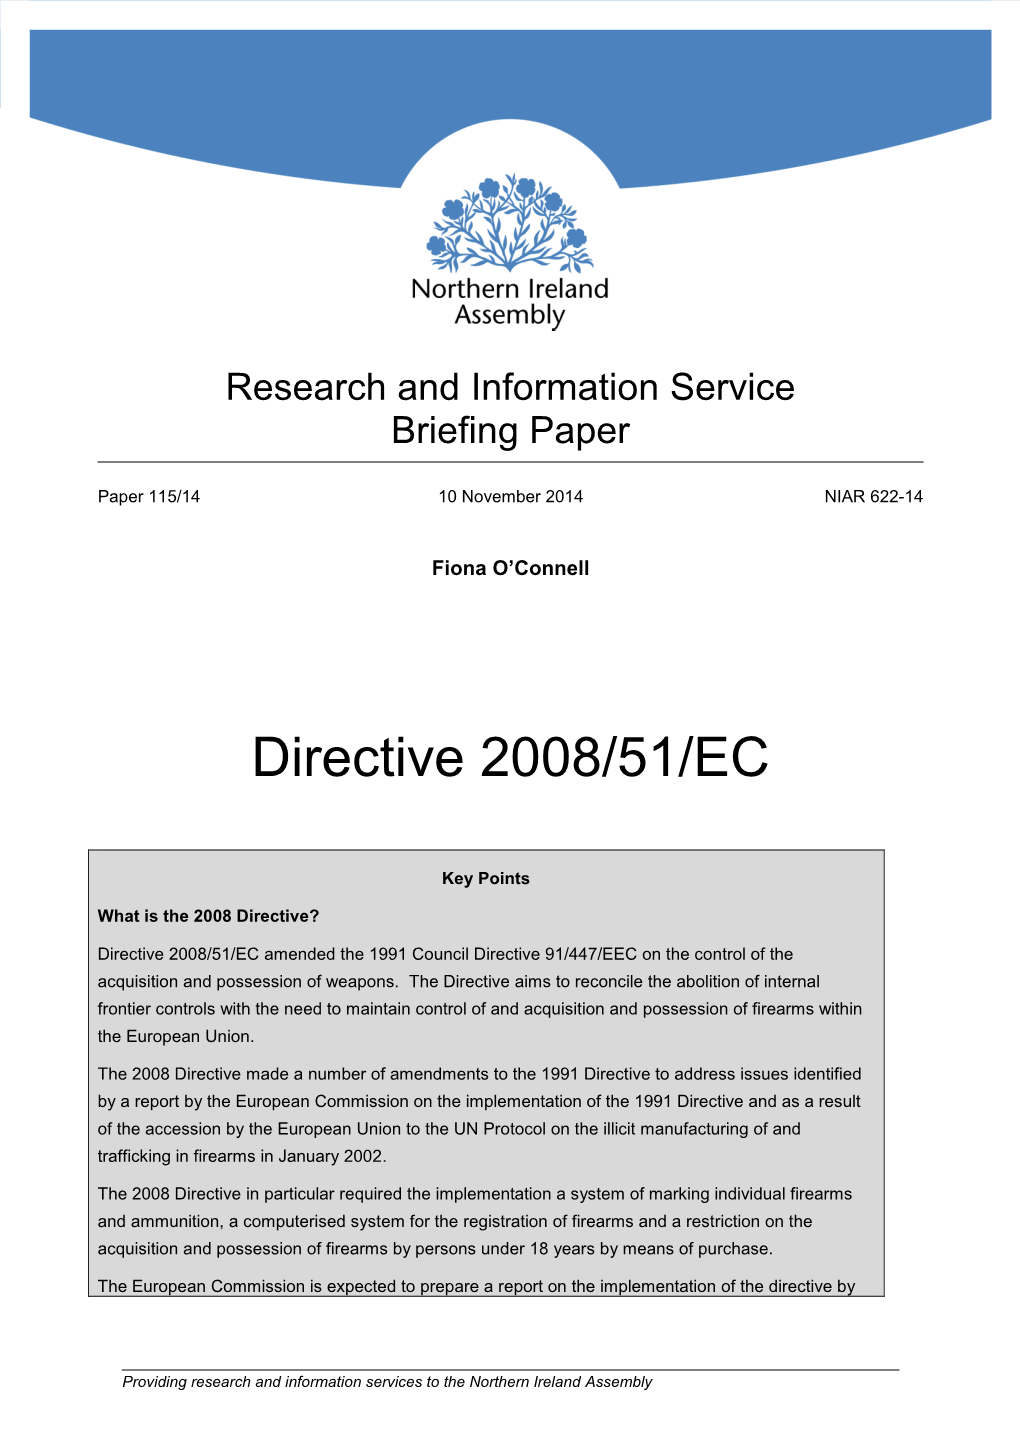 Directive 2008/51/EC